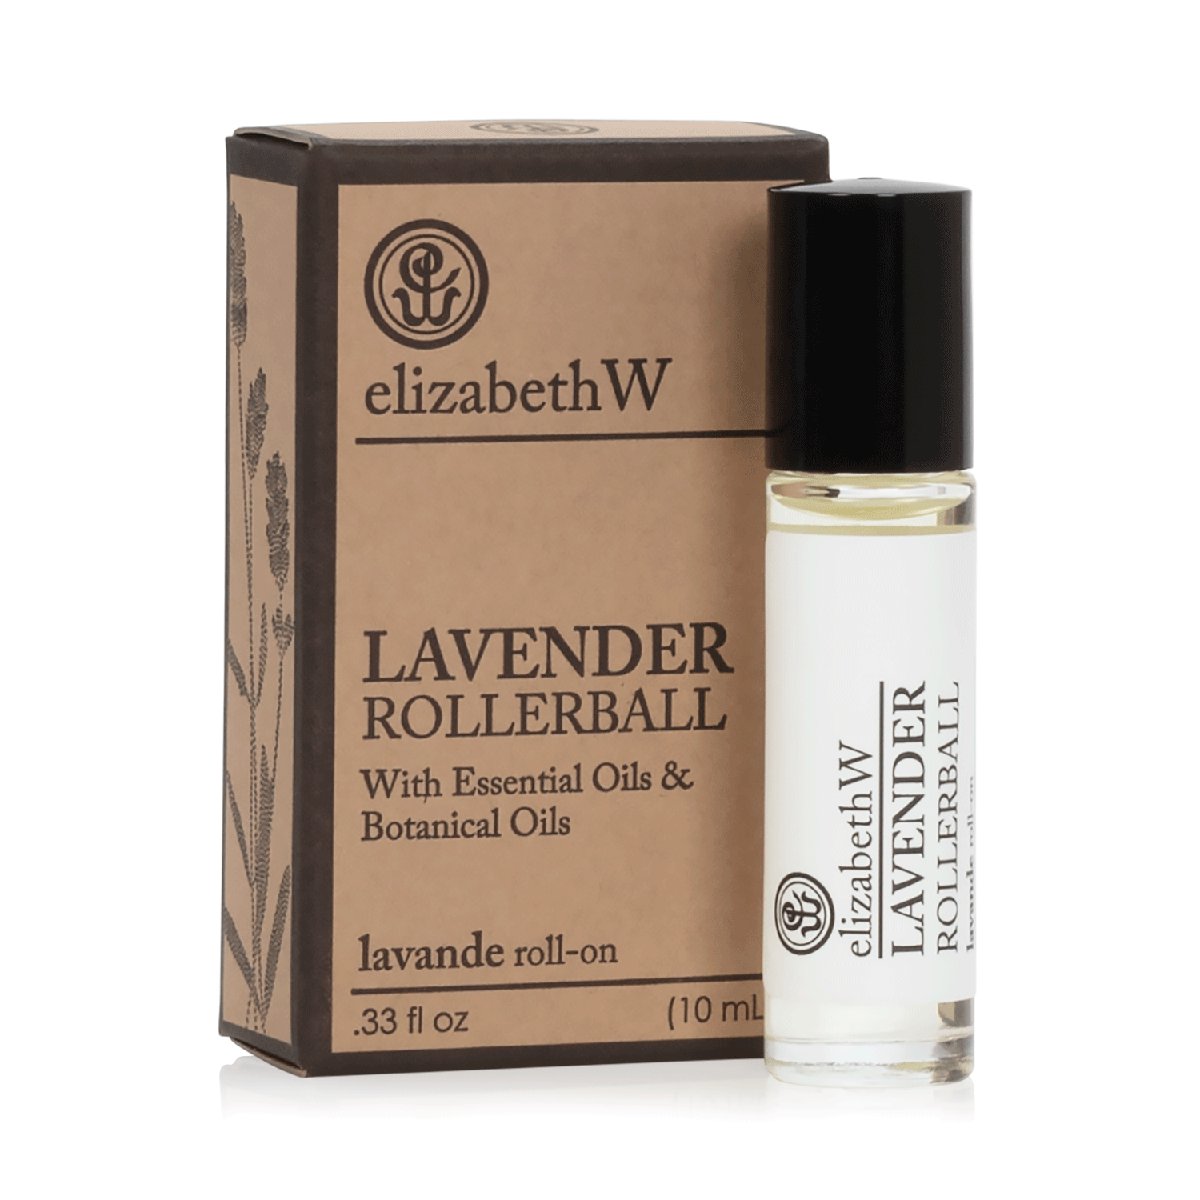 mondocherry - Elizabeth W | essential oils rollerball | lavender